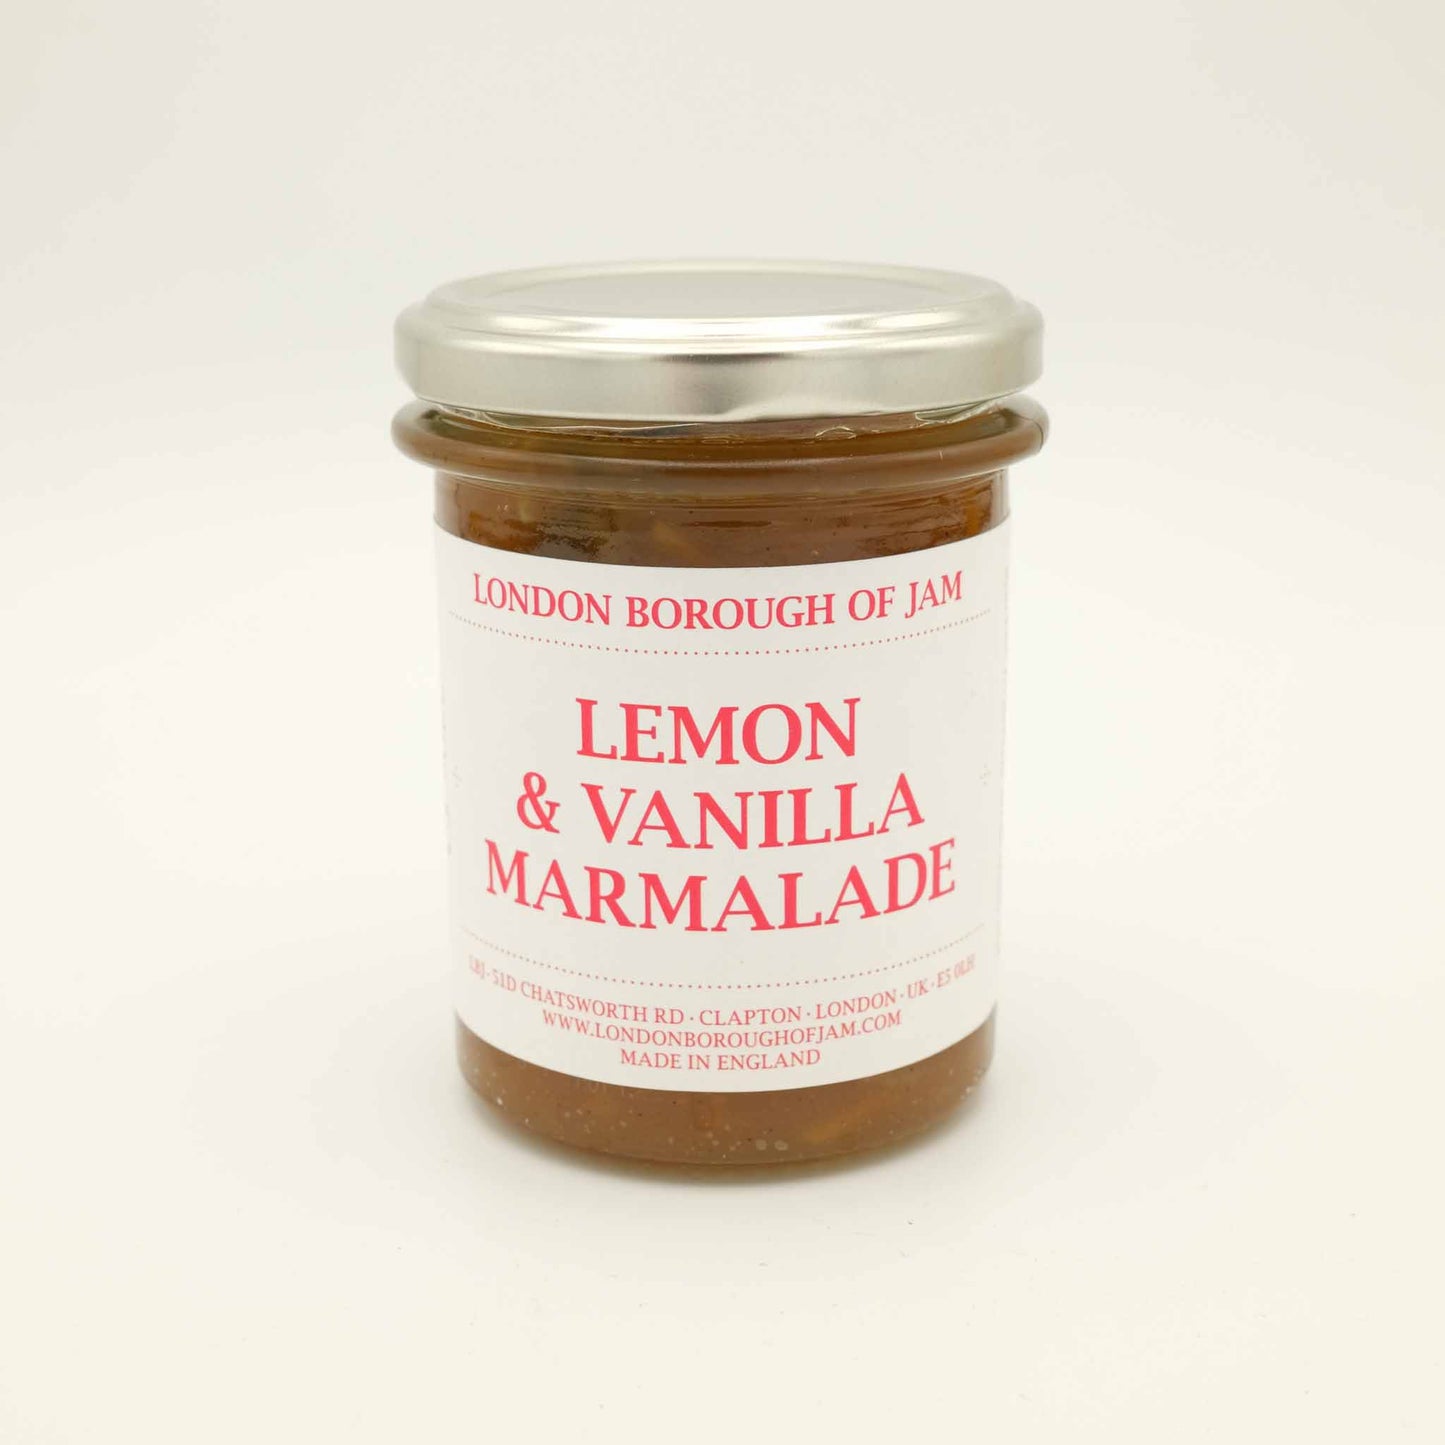 London Borough of Jam London & Vanilla Marmalade